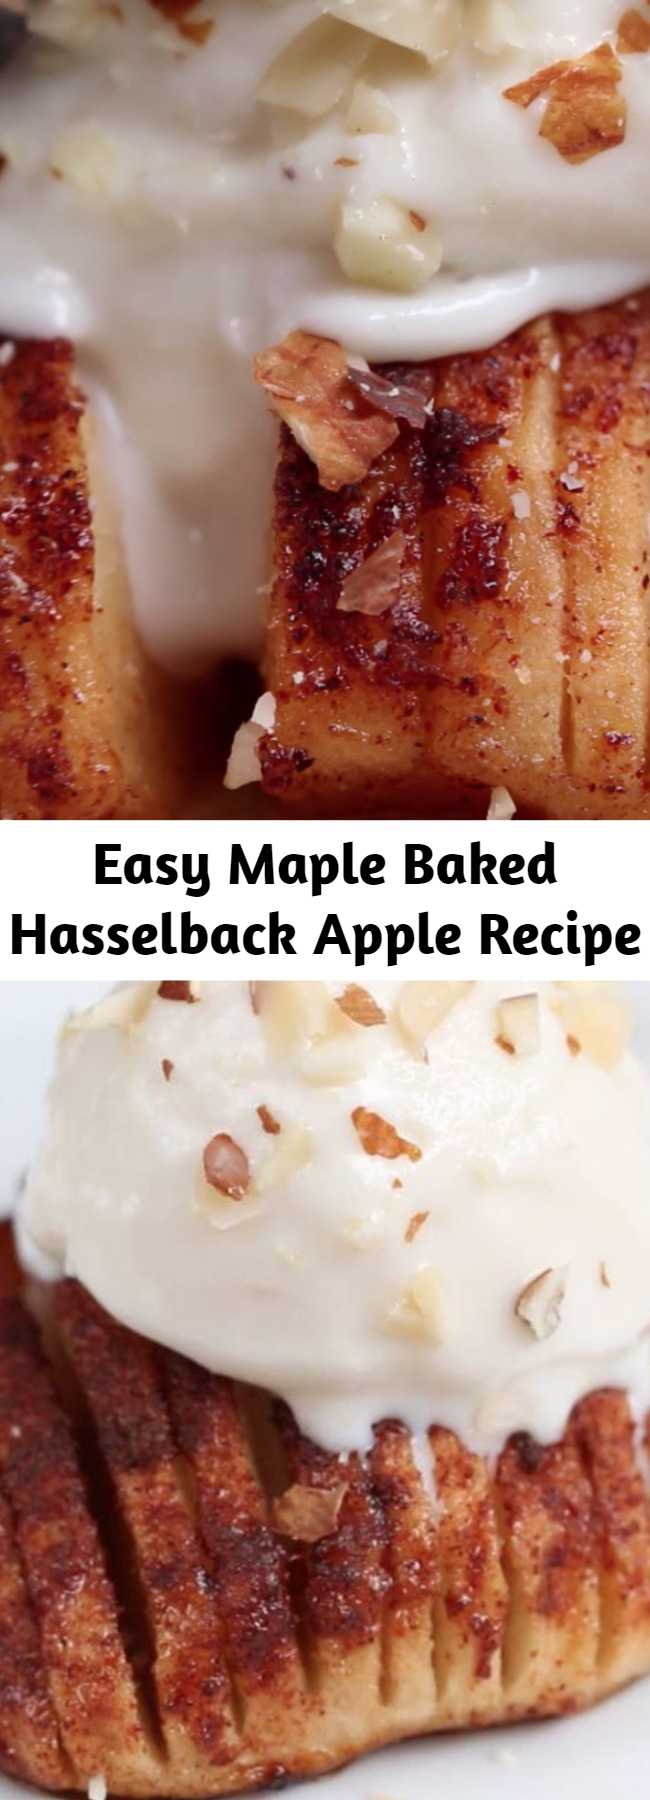 Easy Maple Baked Hasselback Apple Recipe - You Should Make These Maple Baked Hasselback Apples For Dessert